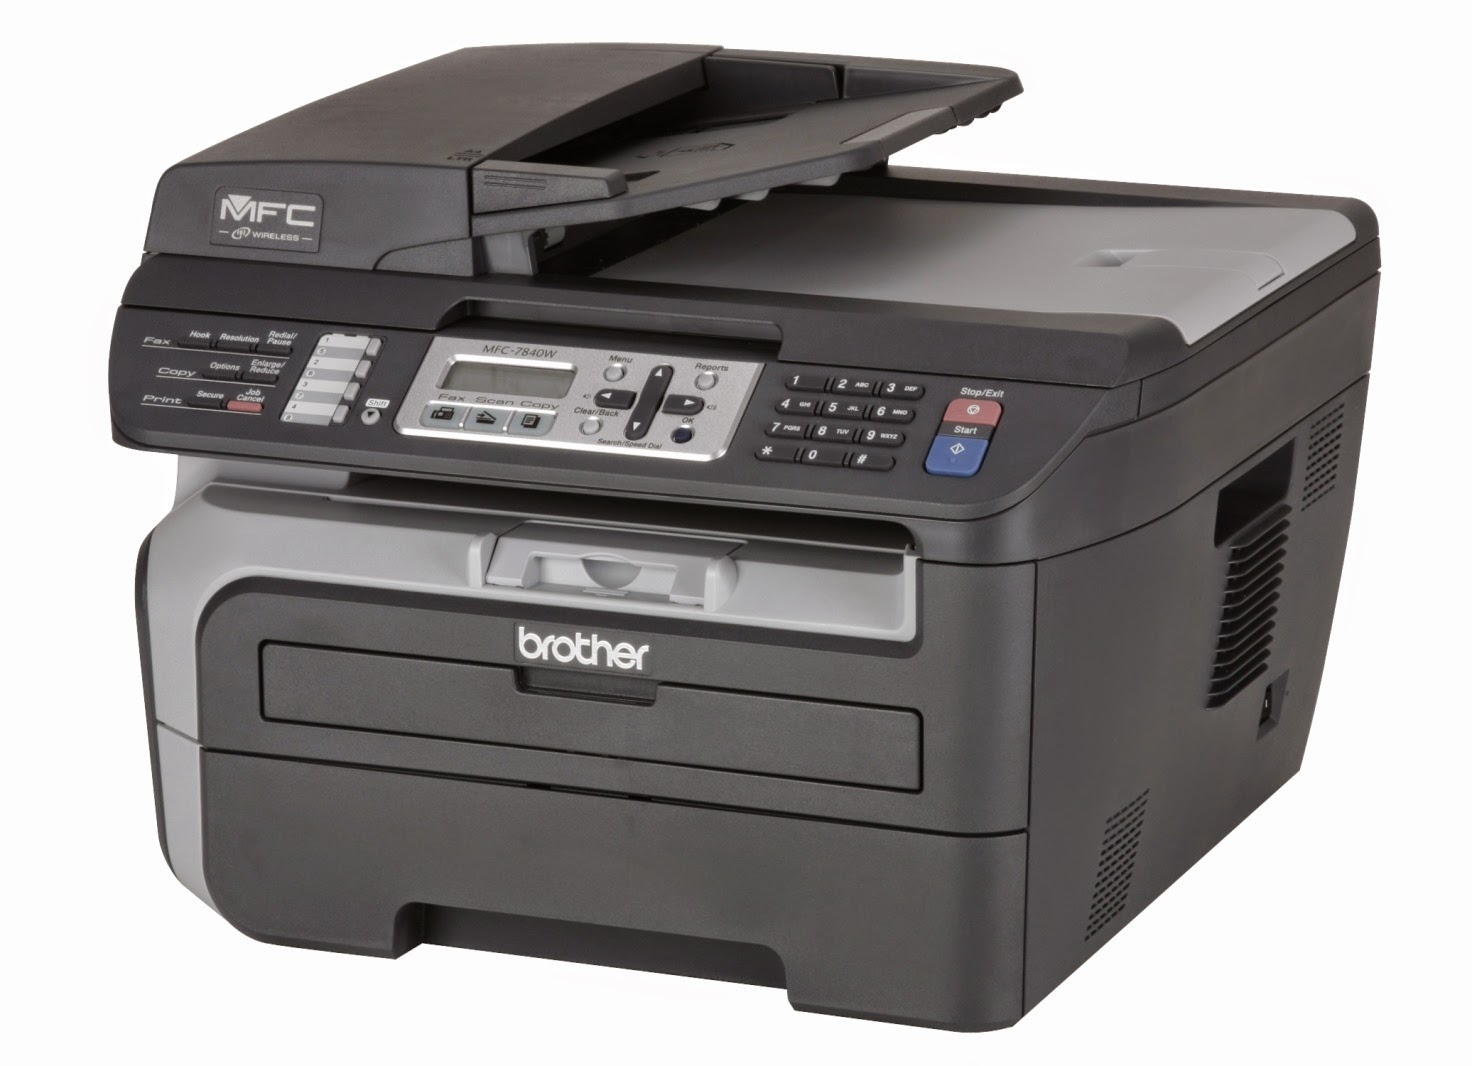 printer driver download Brother MFC-7840W - Printer Driver